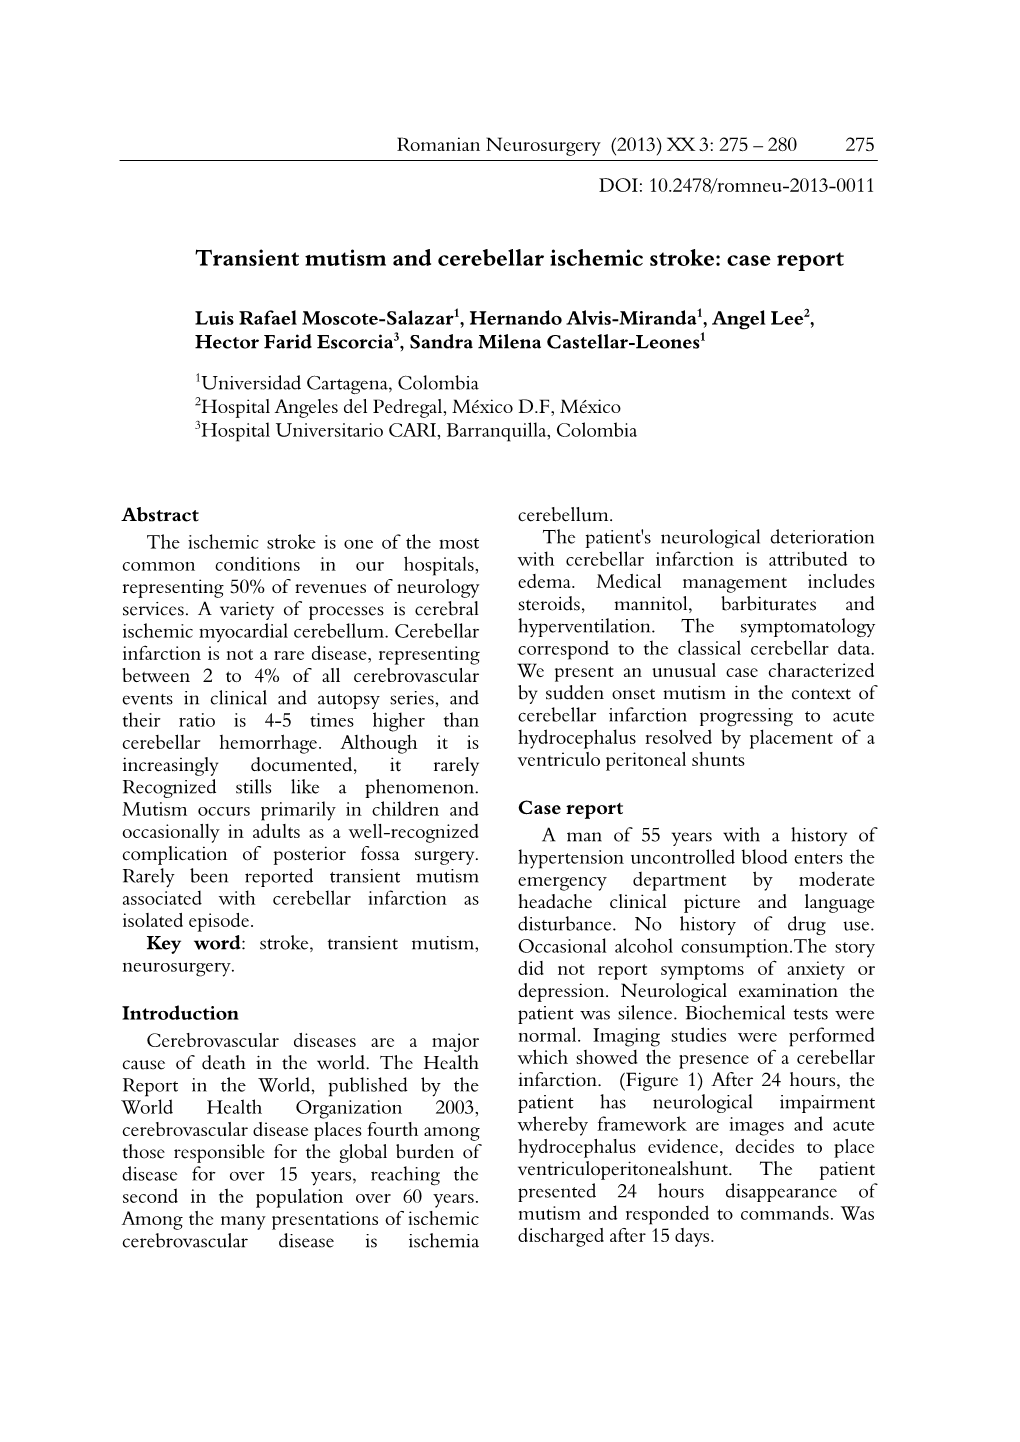 Transient Mutism and Cerebellar Ischemic Stroke: Case Report